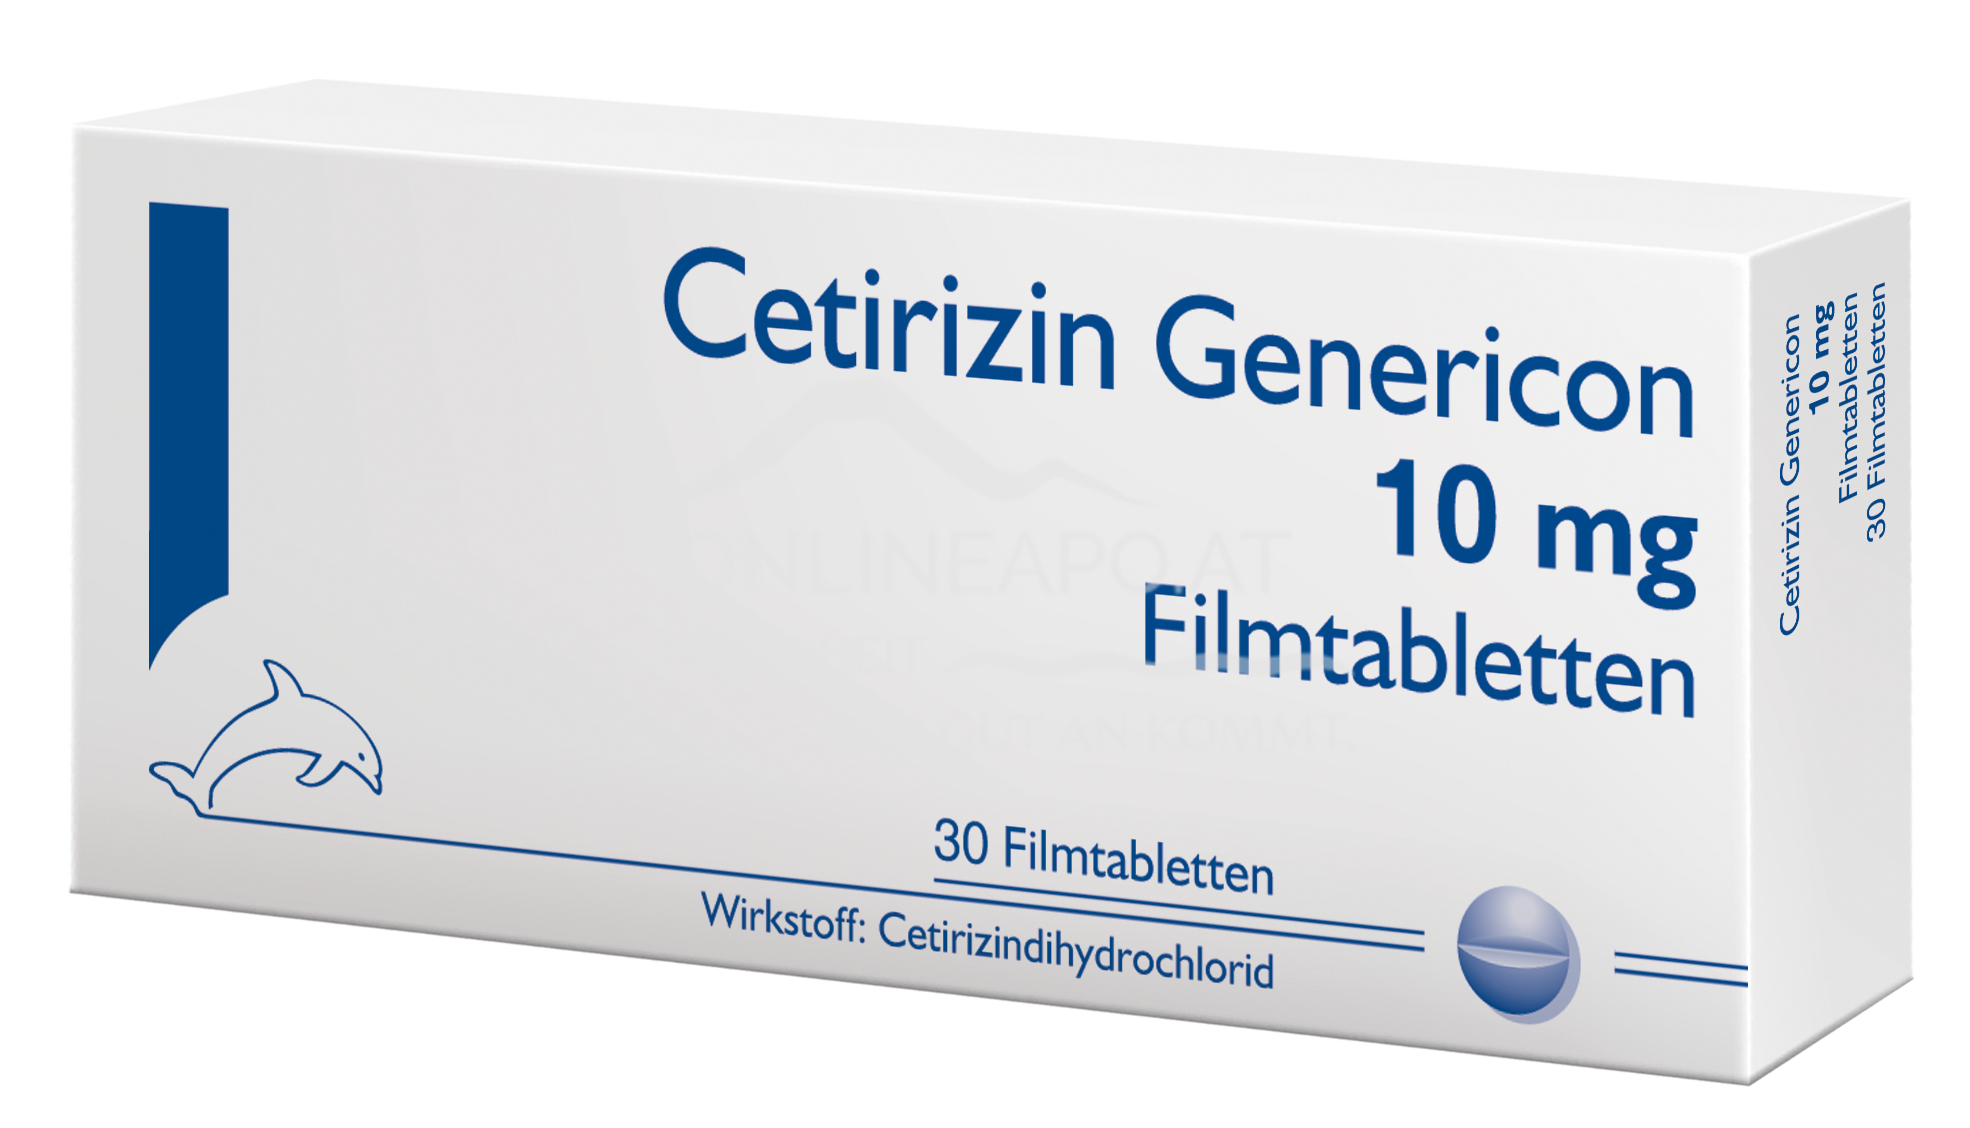 Cetirizin Genericon 10mg Filmtabletten